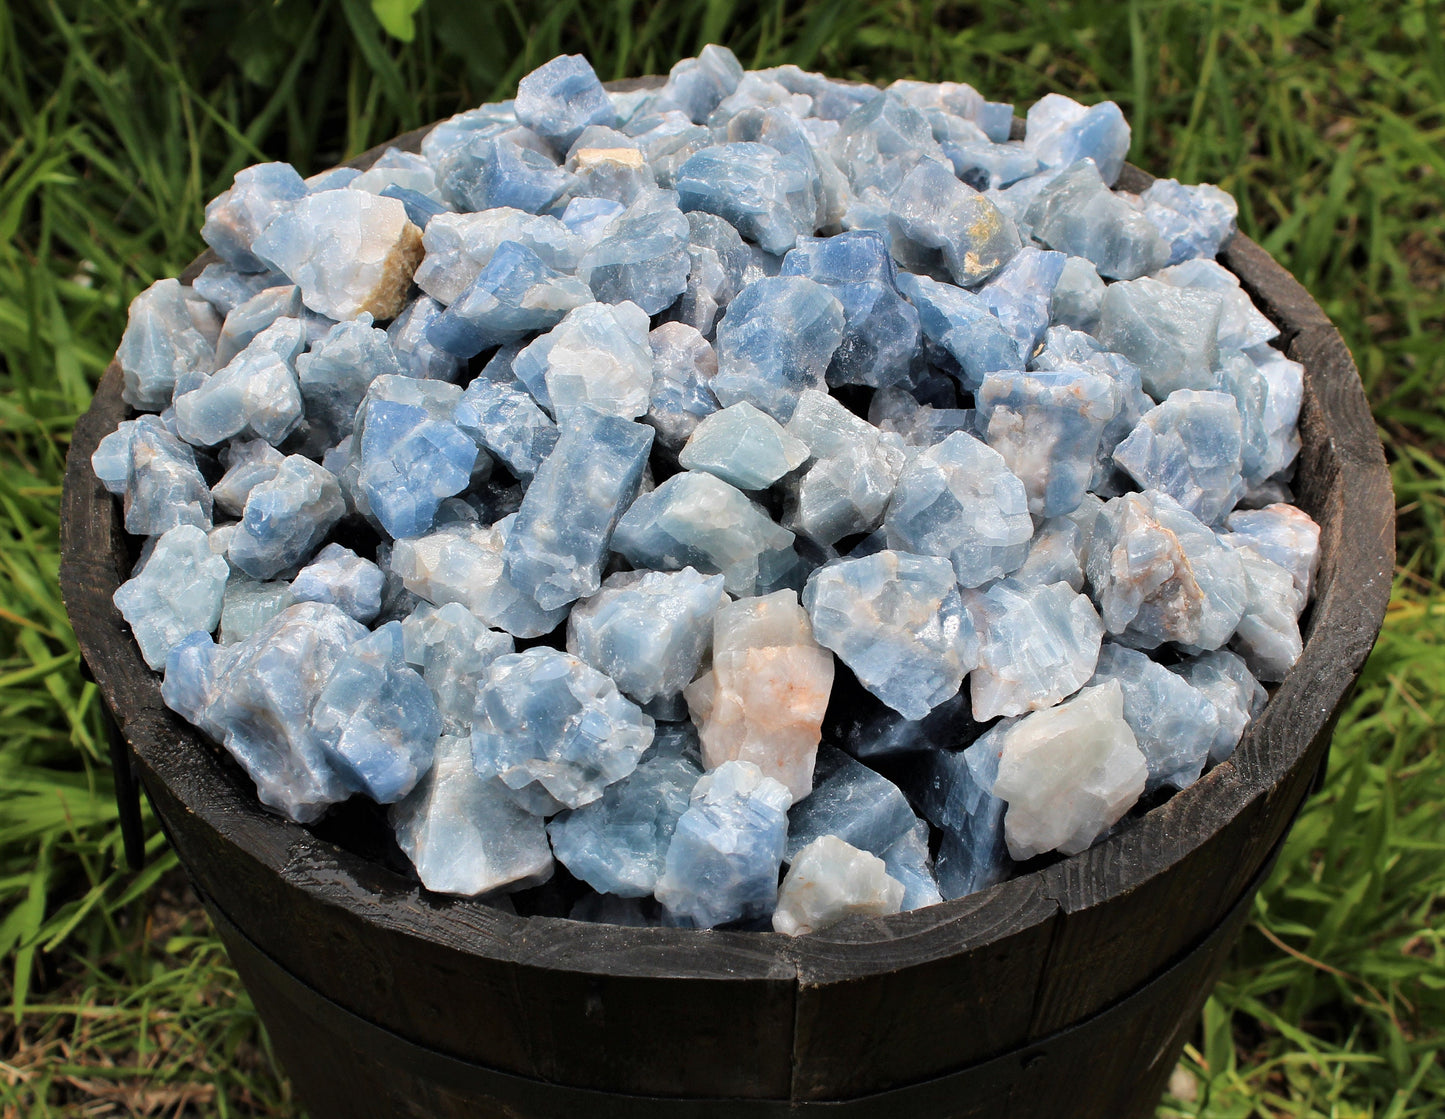 Rough Natural Calcite Crystals